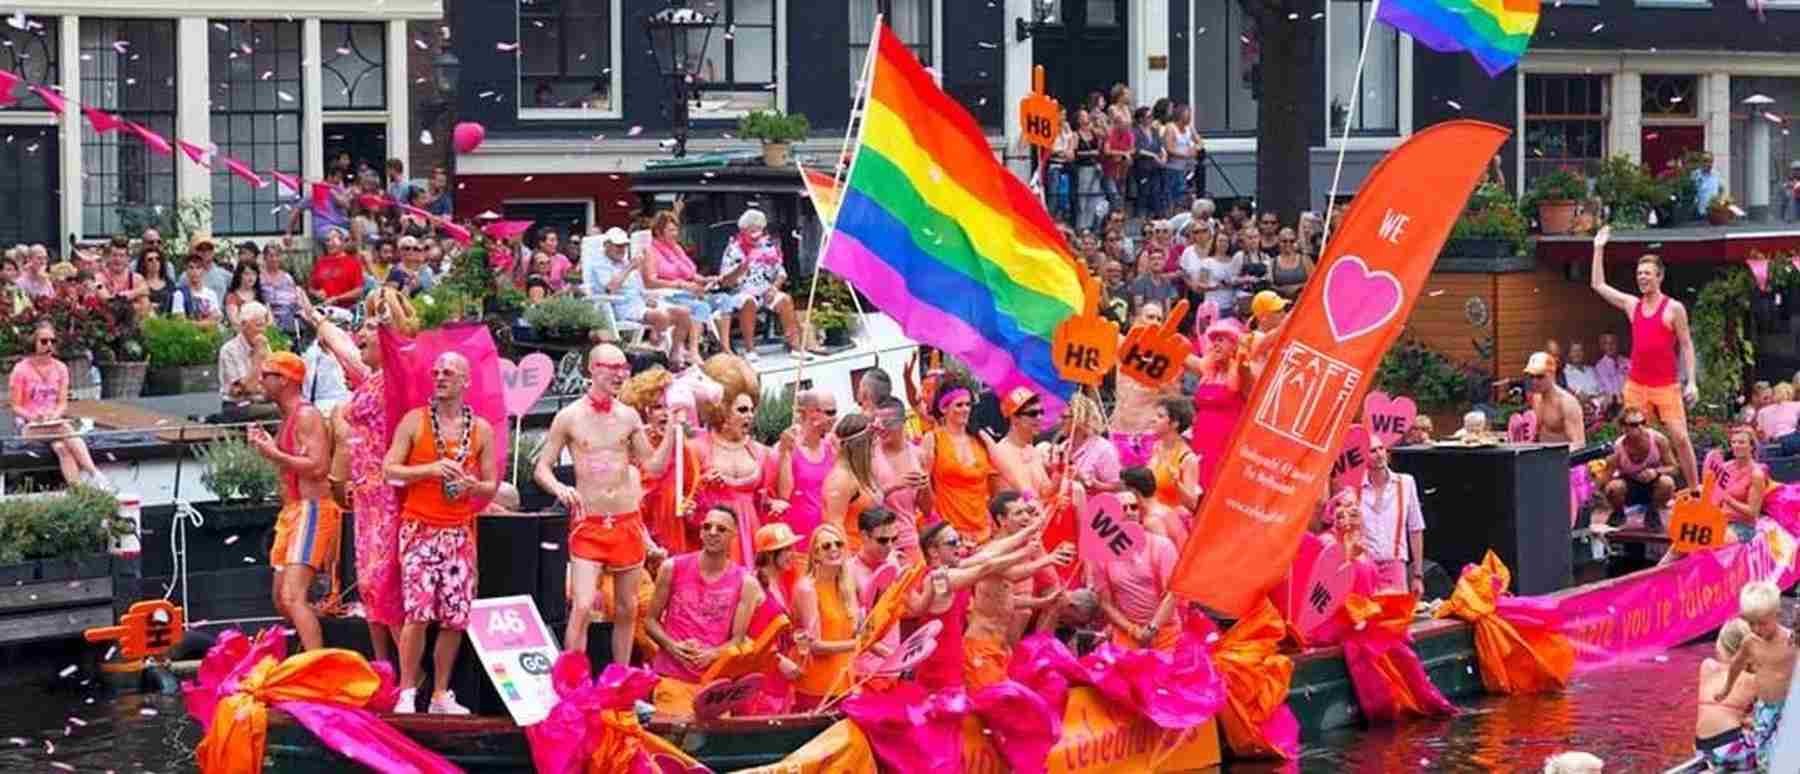 Grachtenparade Pride Amsterdam